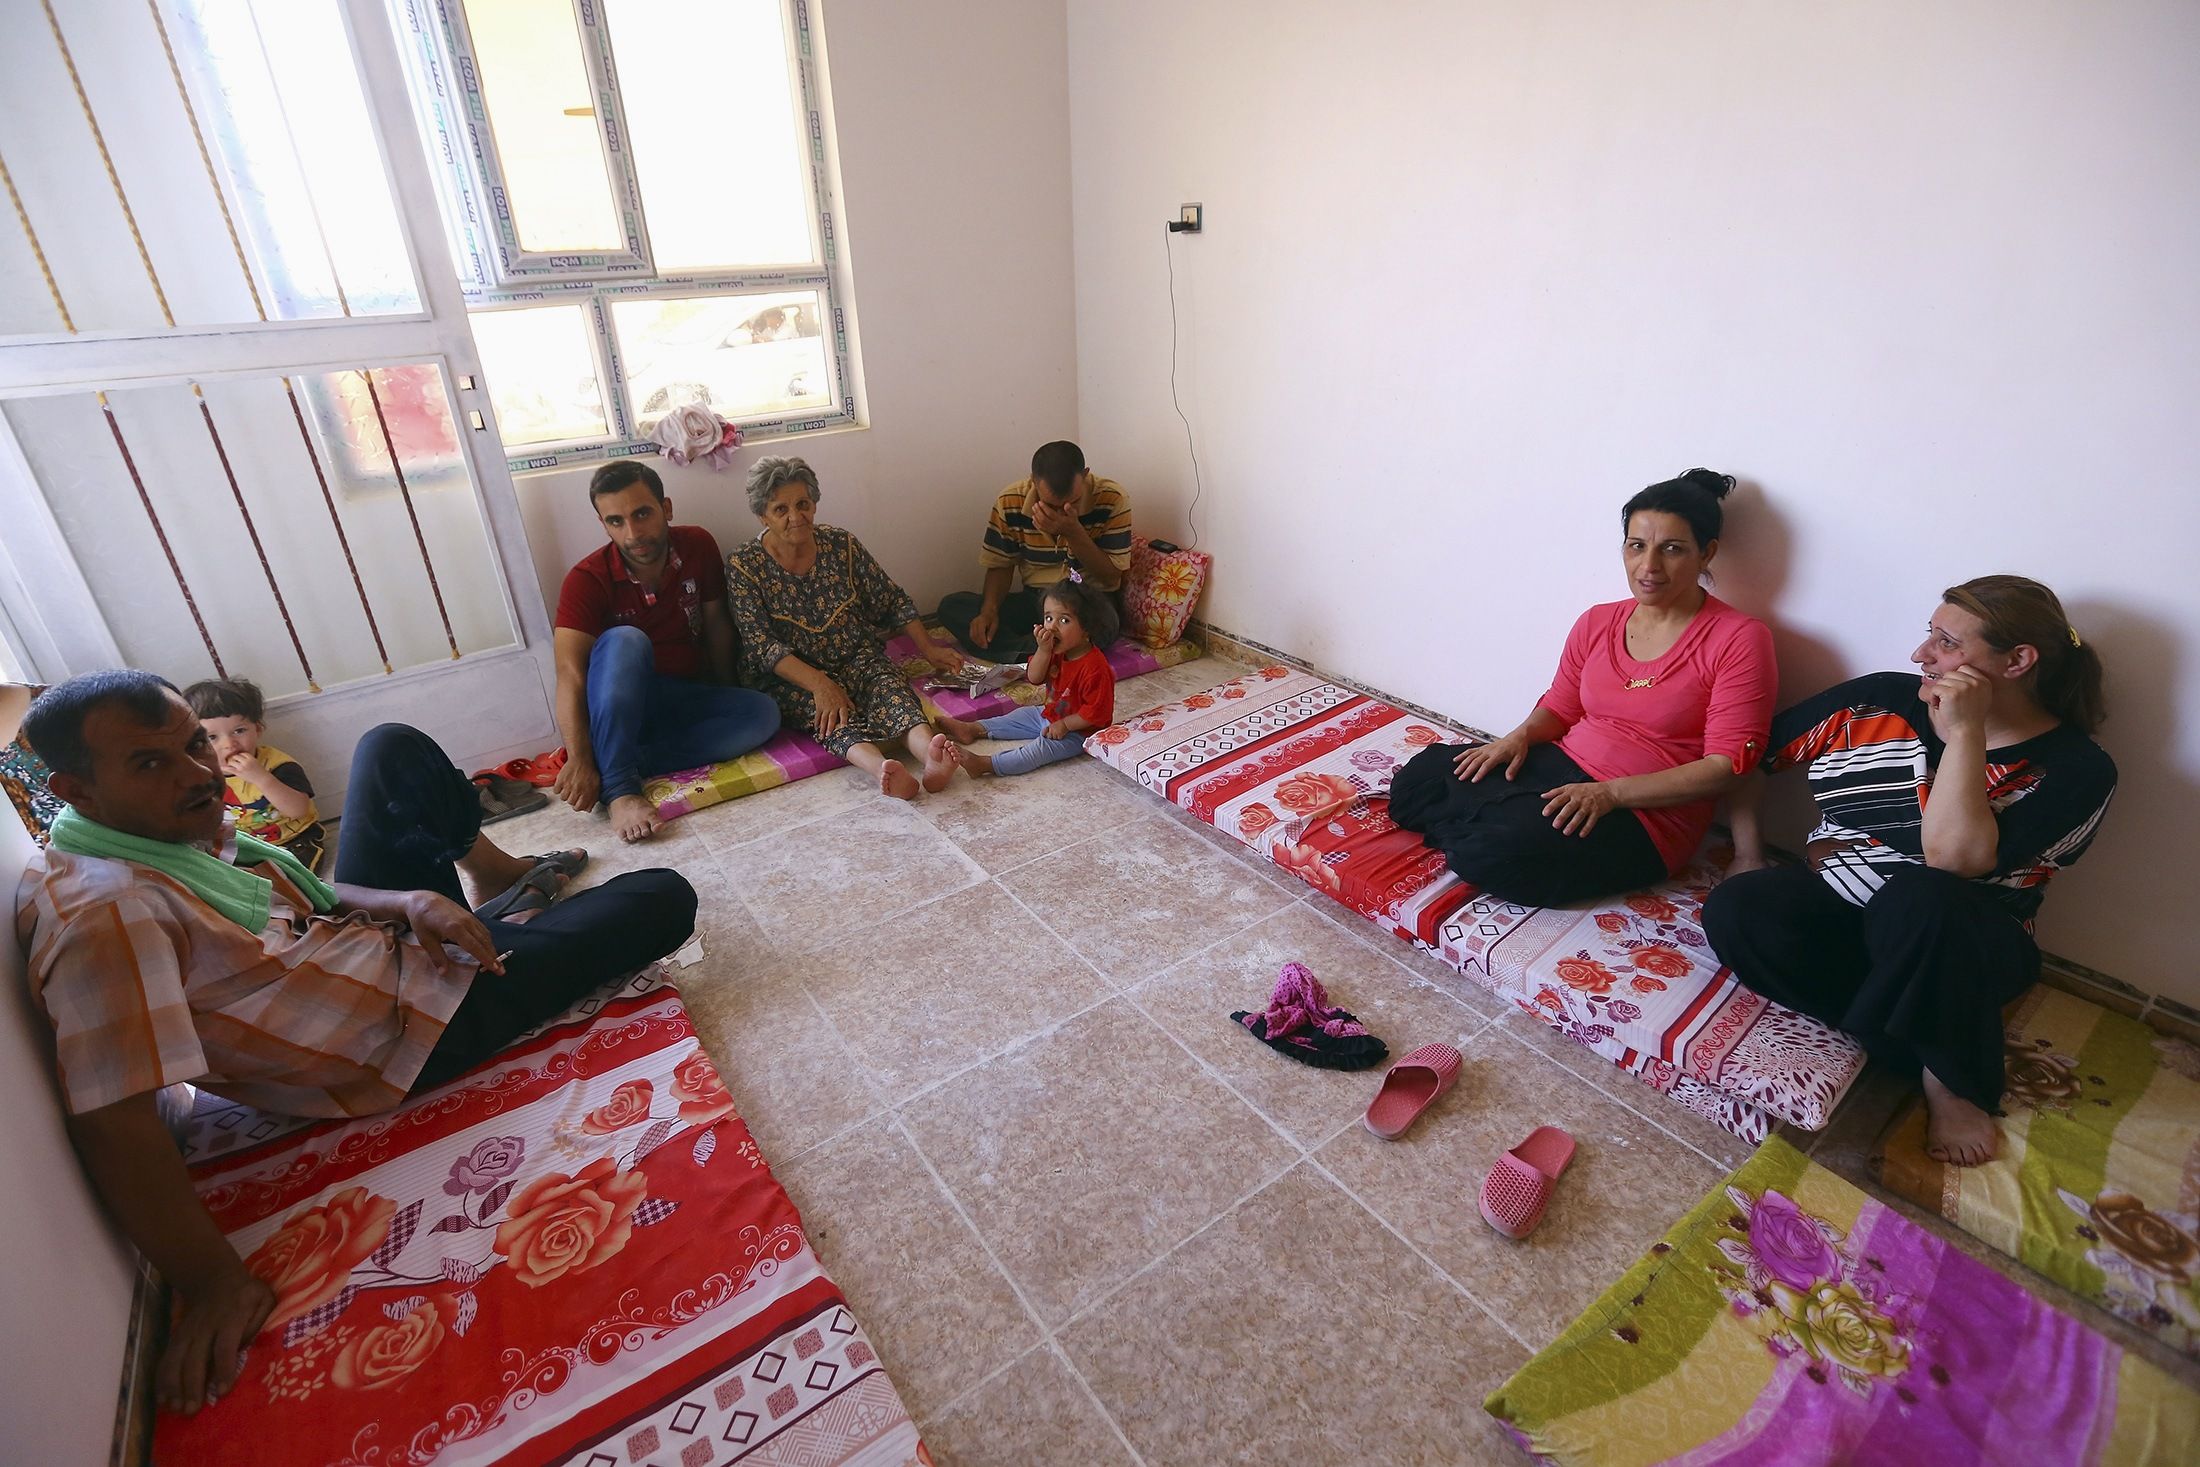 Iraqi Christians Of Mosul-July 19, 2014-04